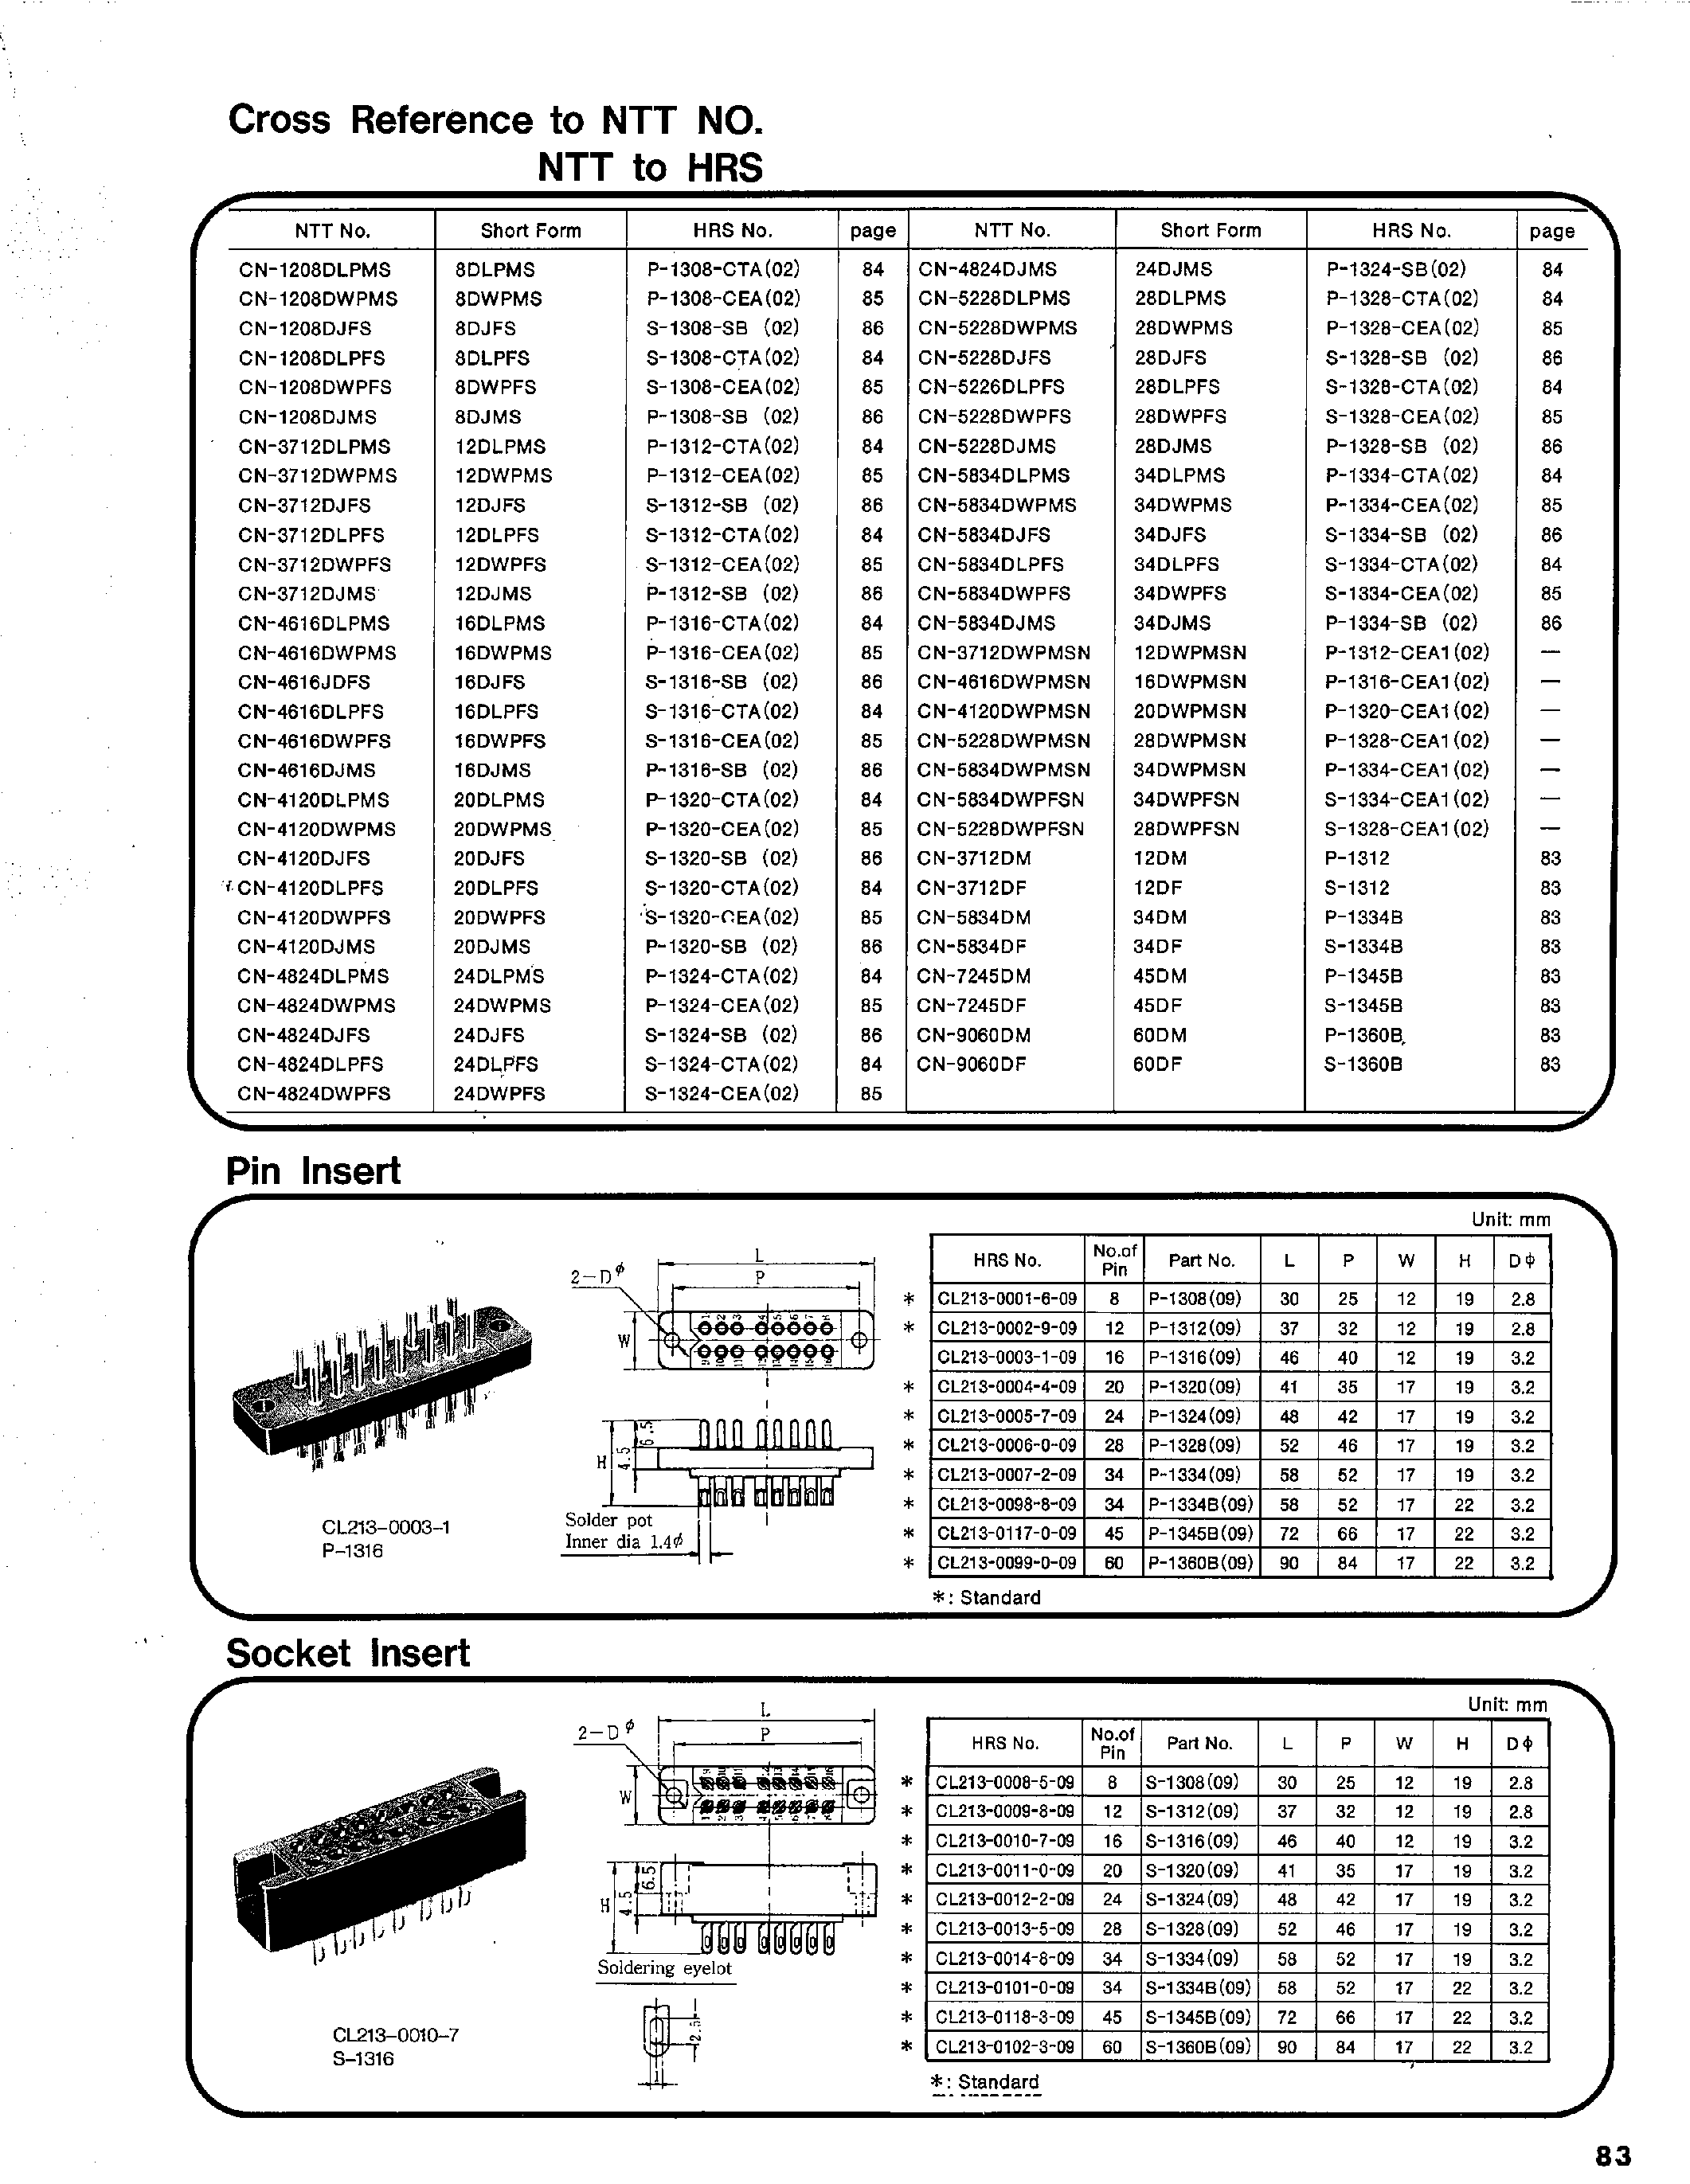 Datasheet P-1334-SB - 1300 SERIES RECTANGULAR CONNECTORS page 2